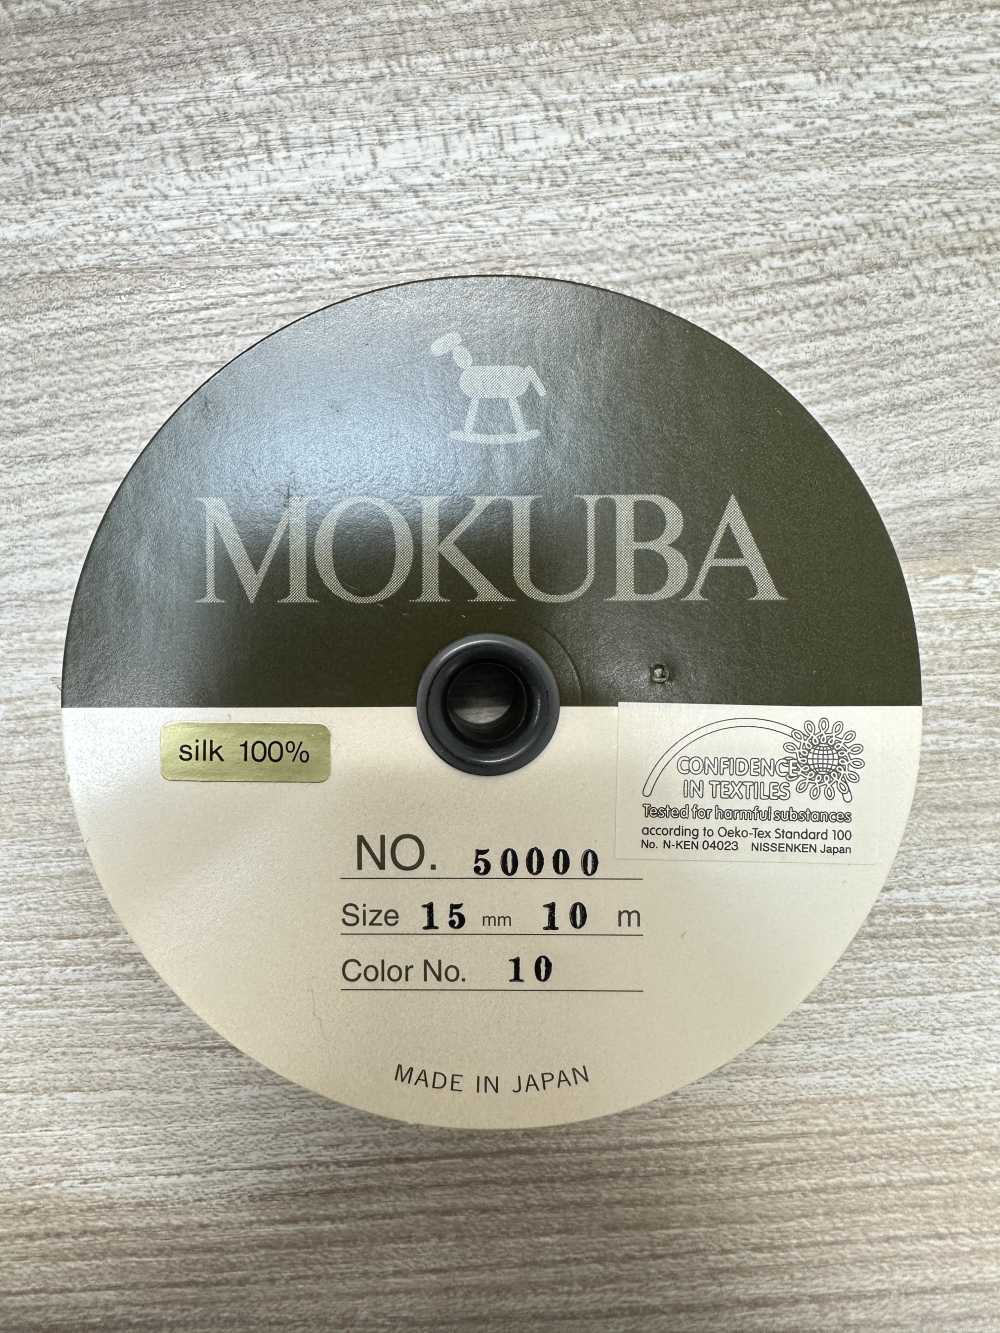 50000 MOKUBA Seiden-Petersham-Klebeband [Outlet][Bandbandschnur] Mokuba